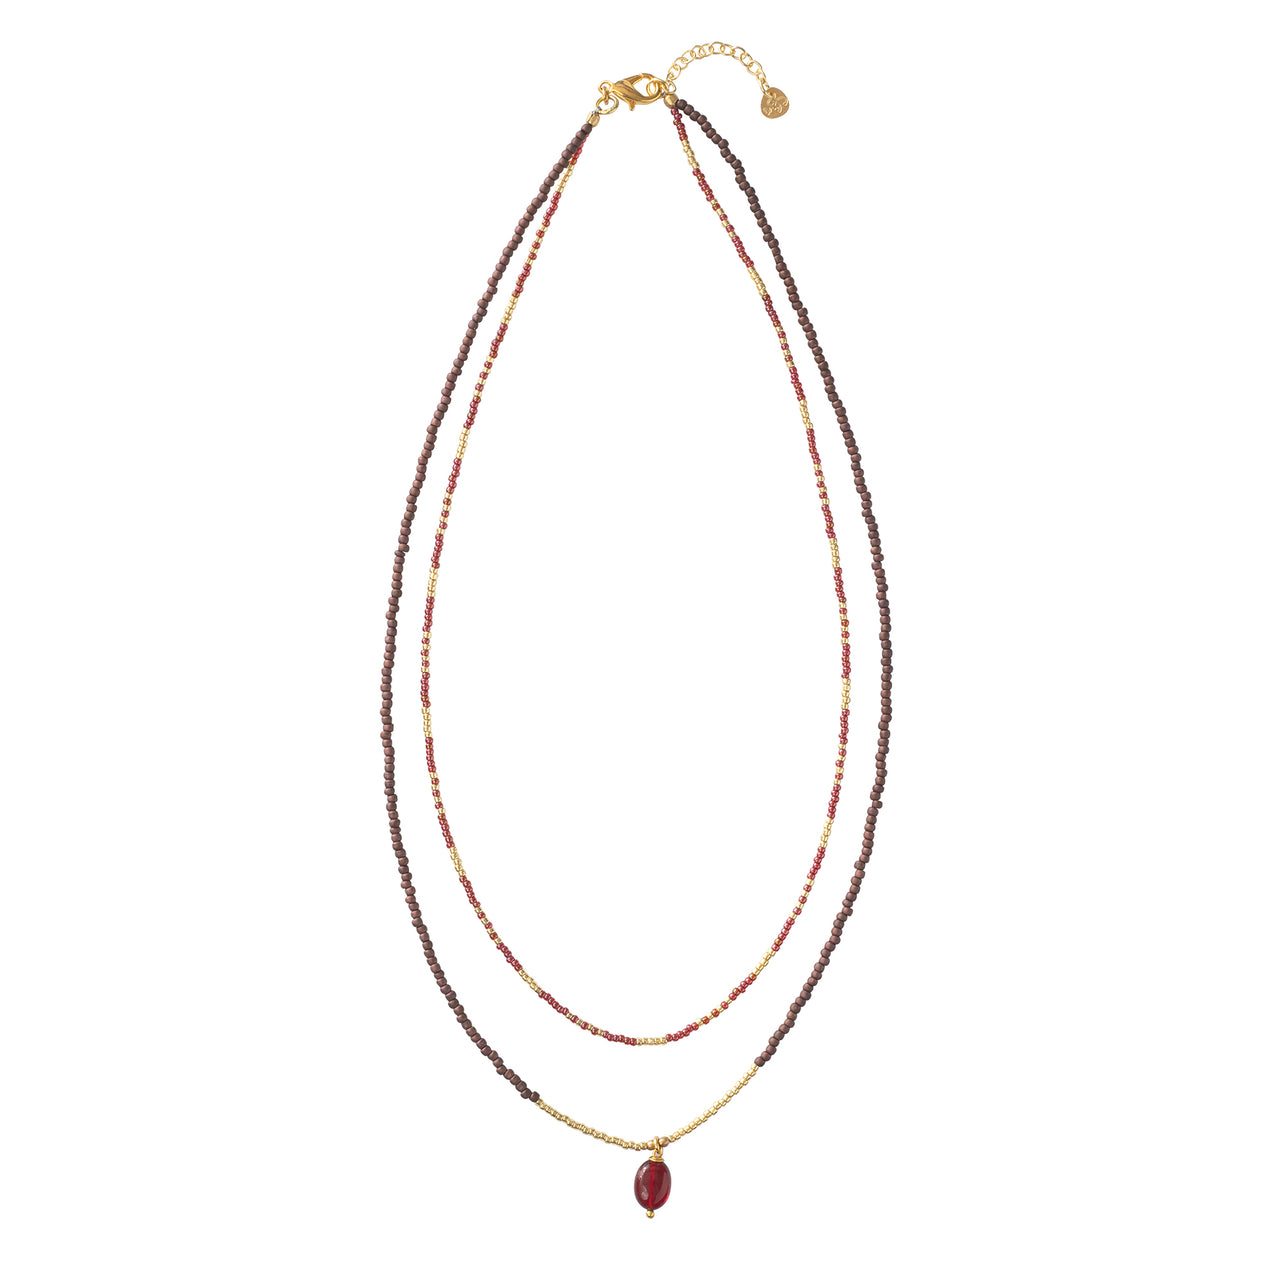 Admire Garnet Gold Necklace Garnet - LEEF mode en accessoires